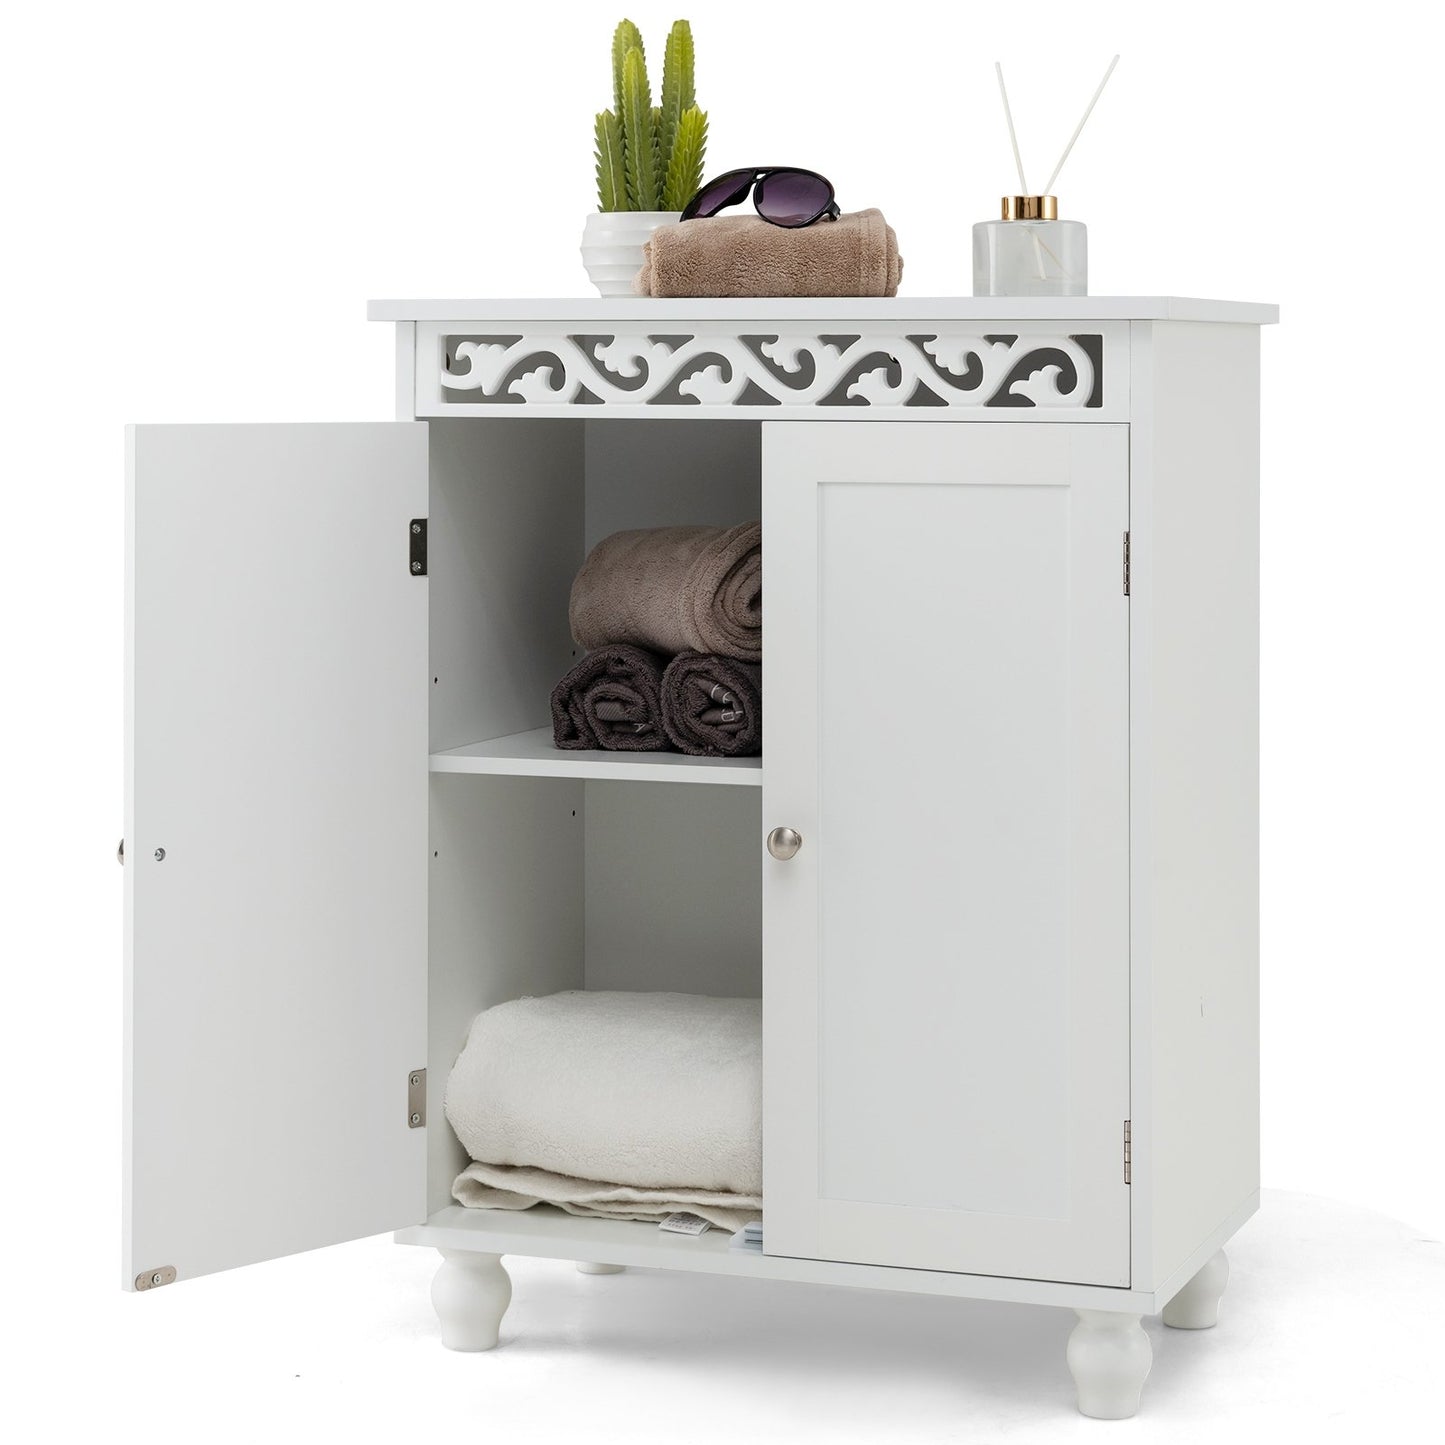 Freestanding Bathroom Cabinet Floor Storage Organizer with Adjustable Shelf and Solid Wood Legs, White